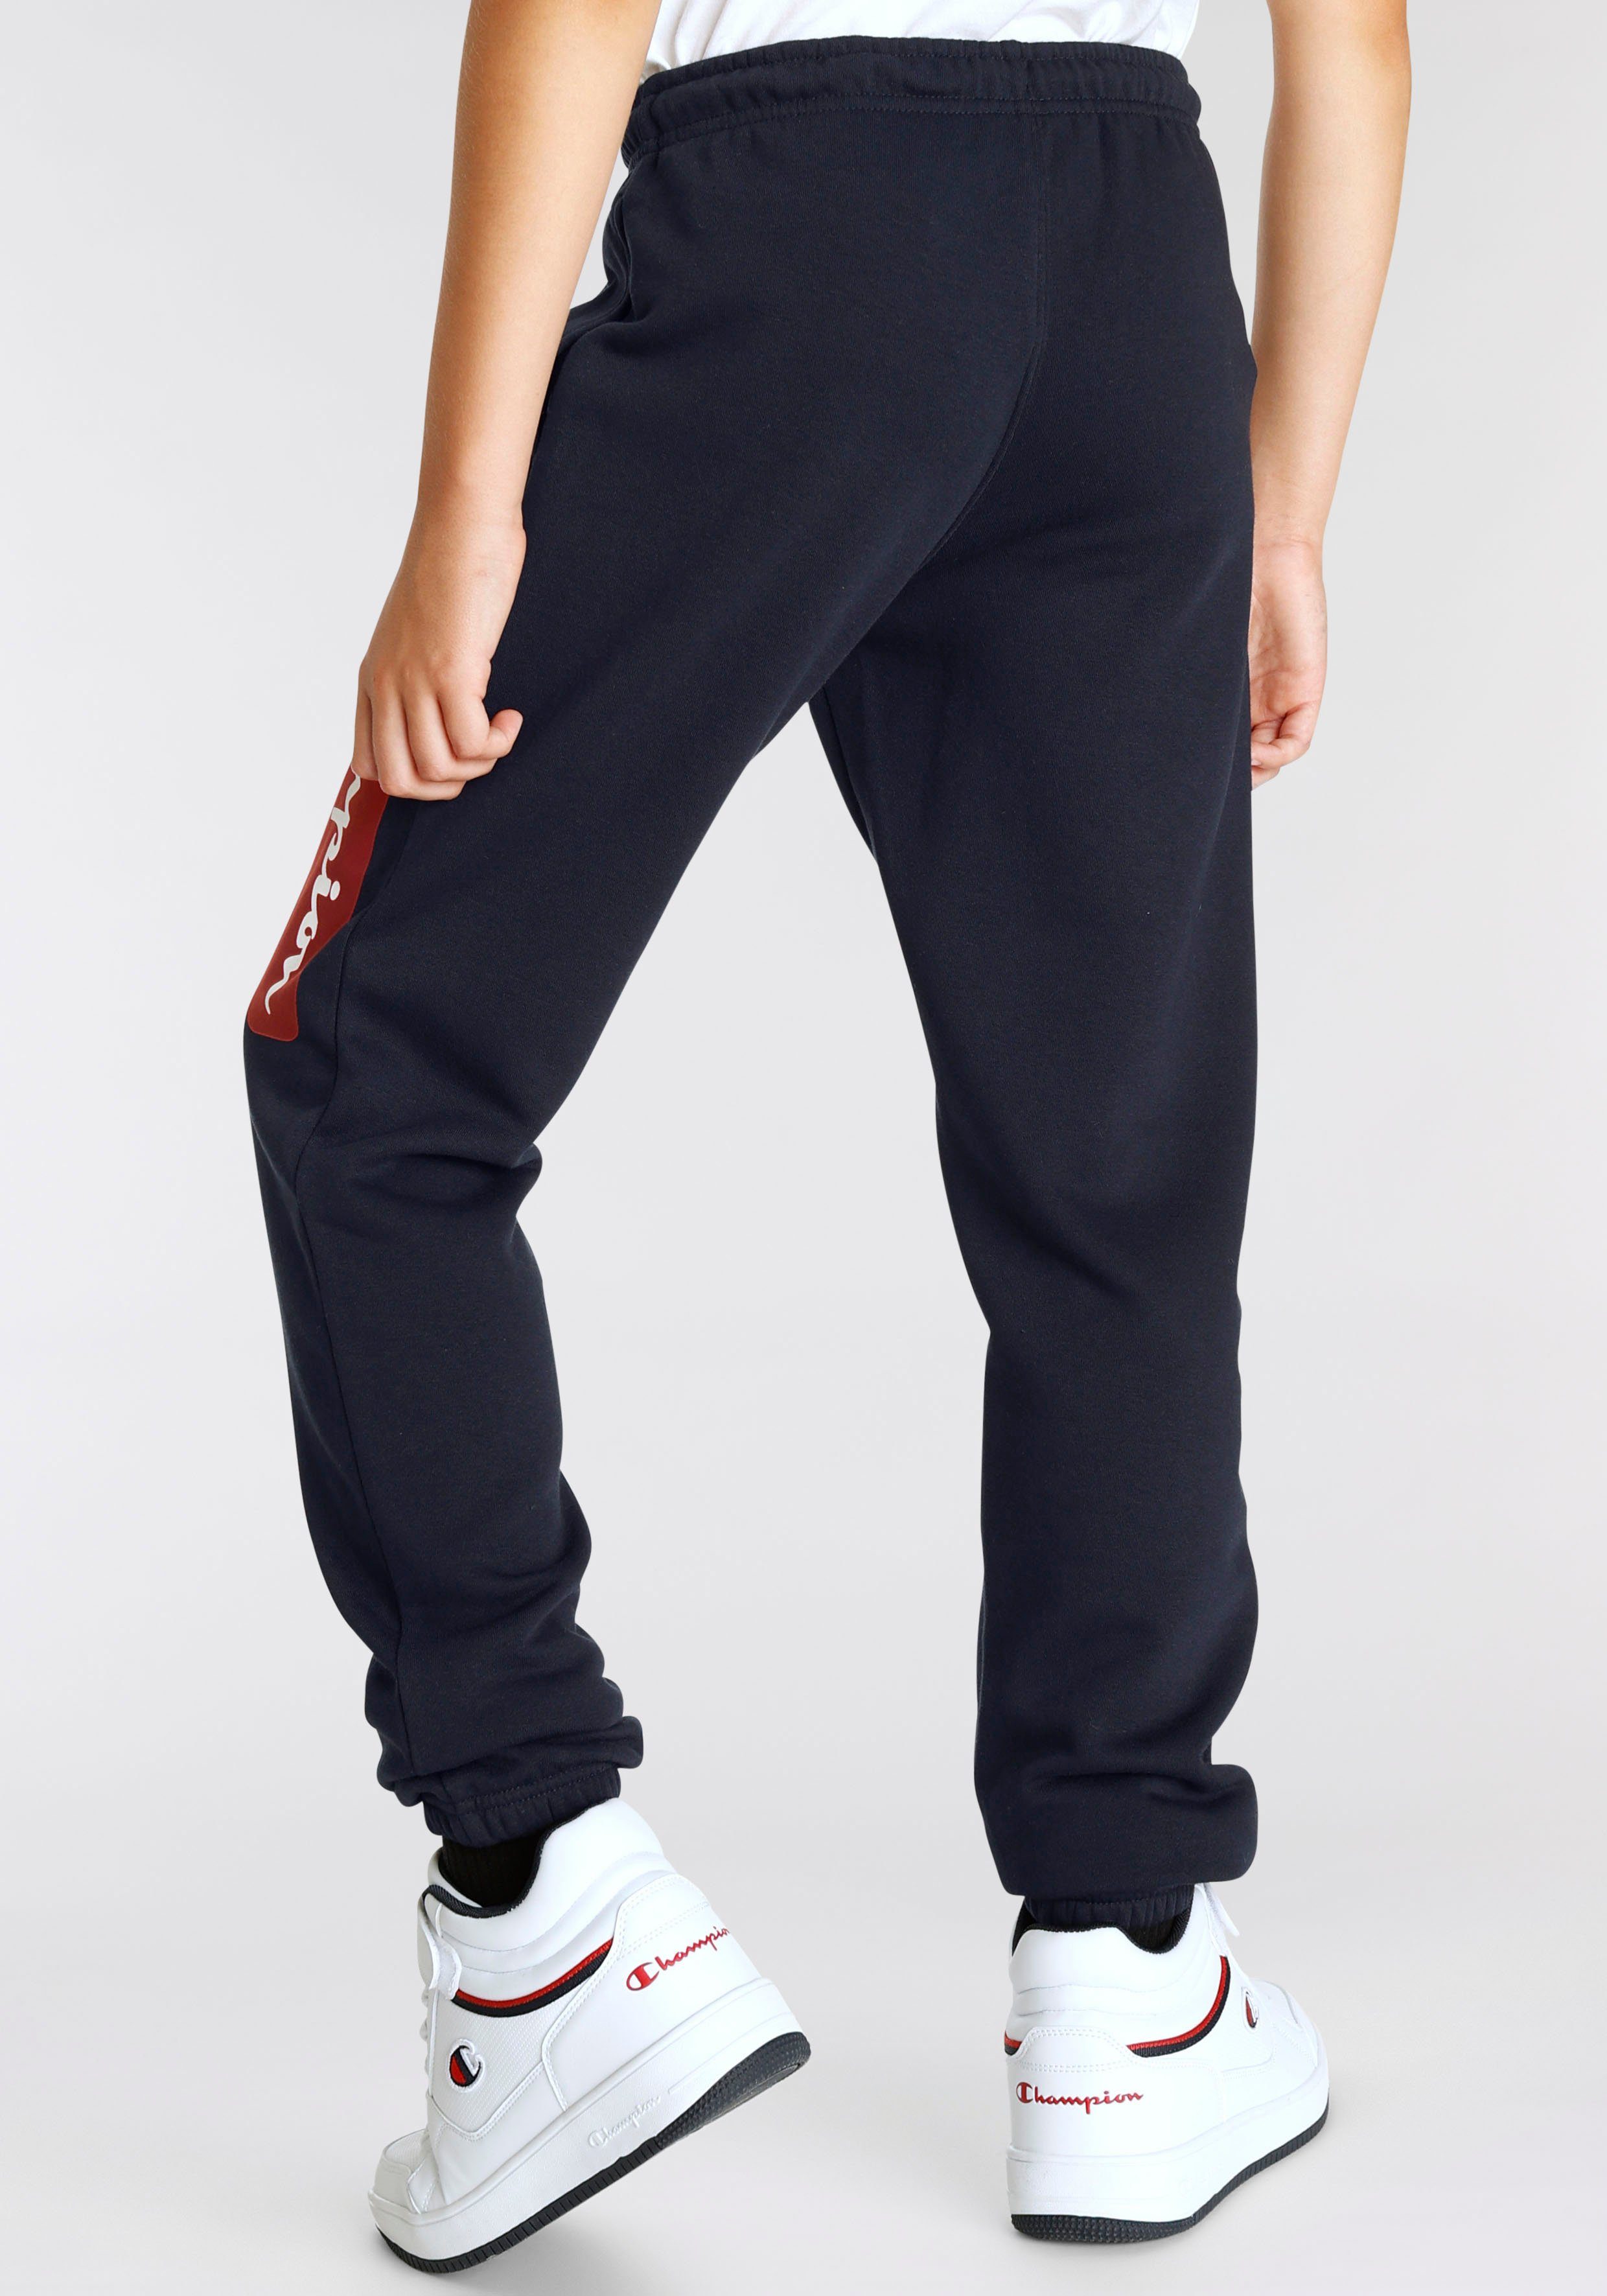 - Shop Pants für Champion Elastic Graphic Cuff marine Jogginghose Kinder